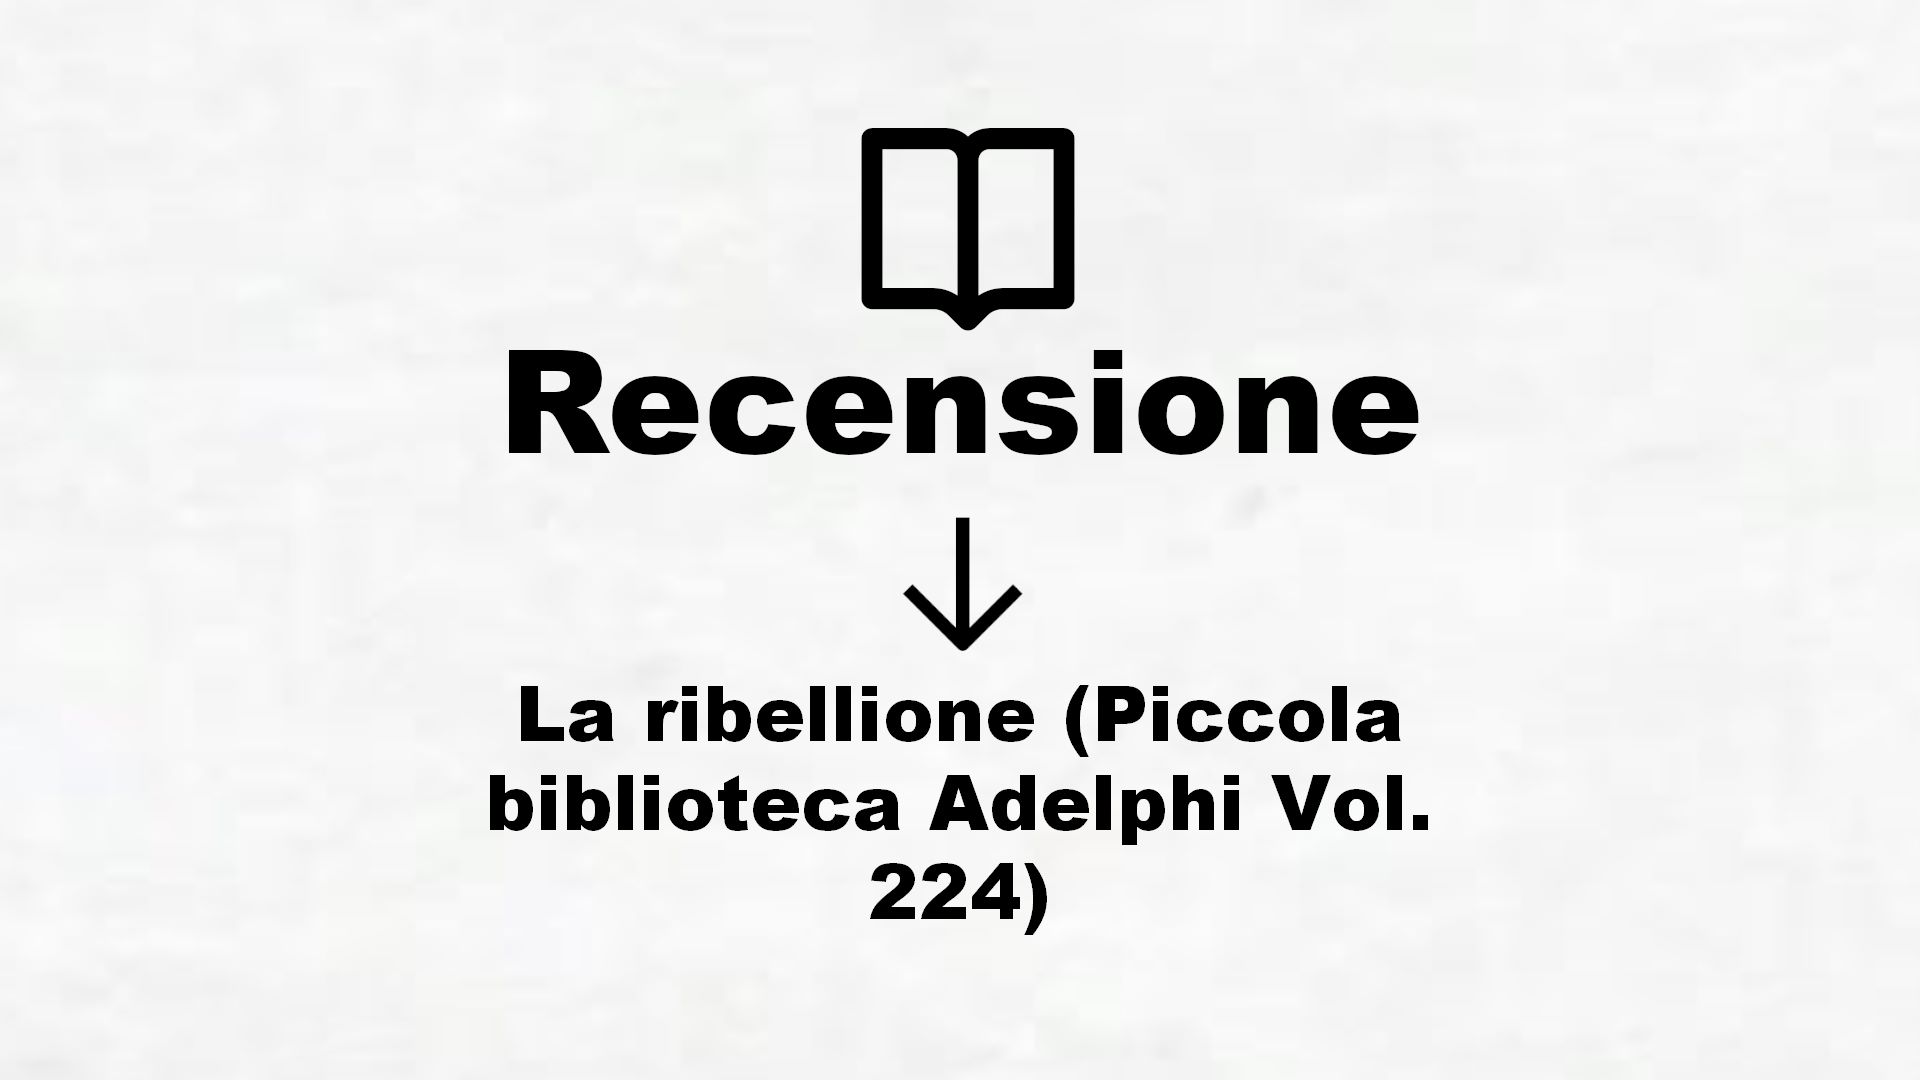 La ribellione (Piccola biblioteca Adelphi Vol. 224) – Recensione Libro